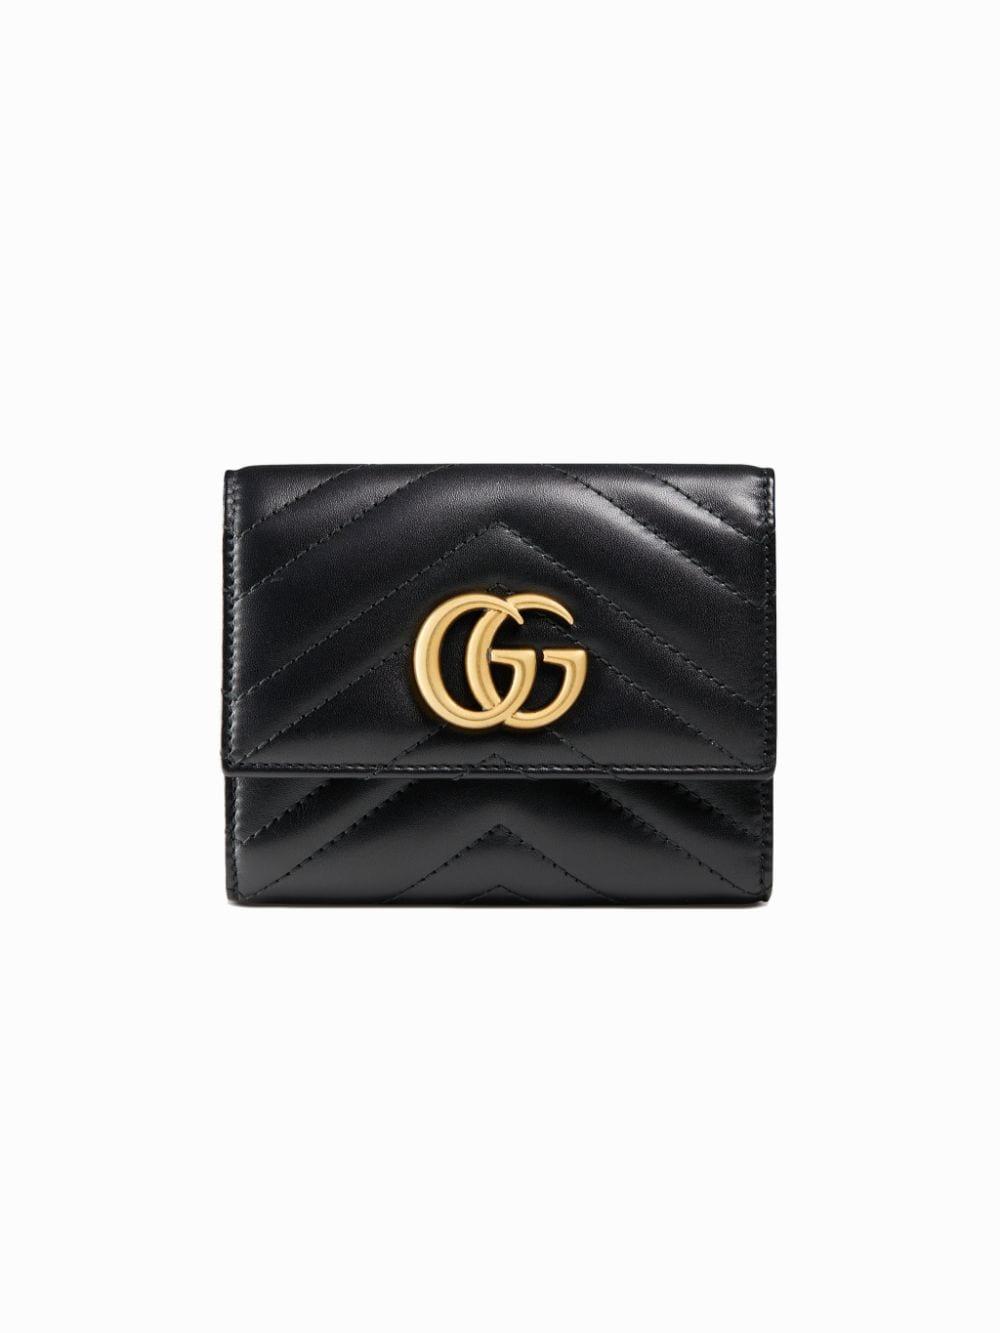 gucci marmont wallet black